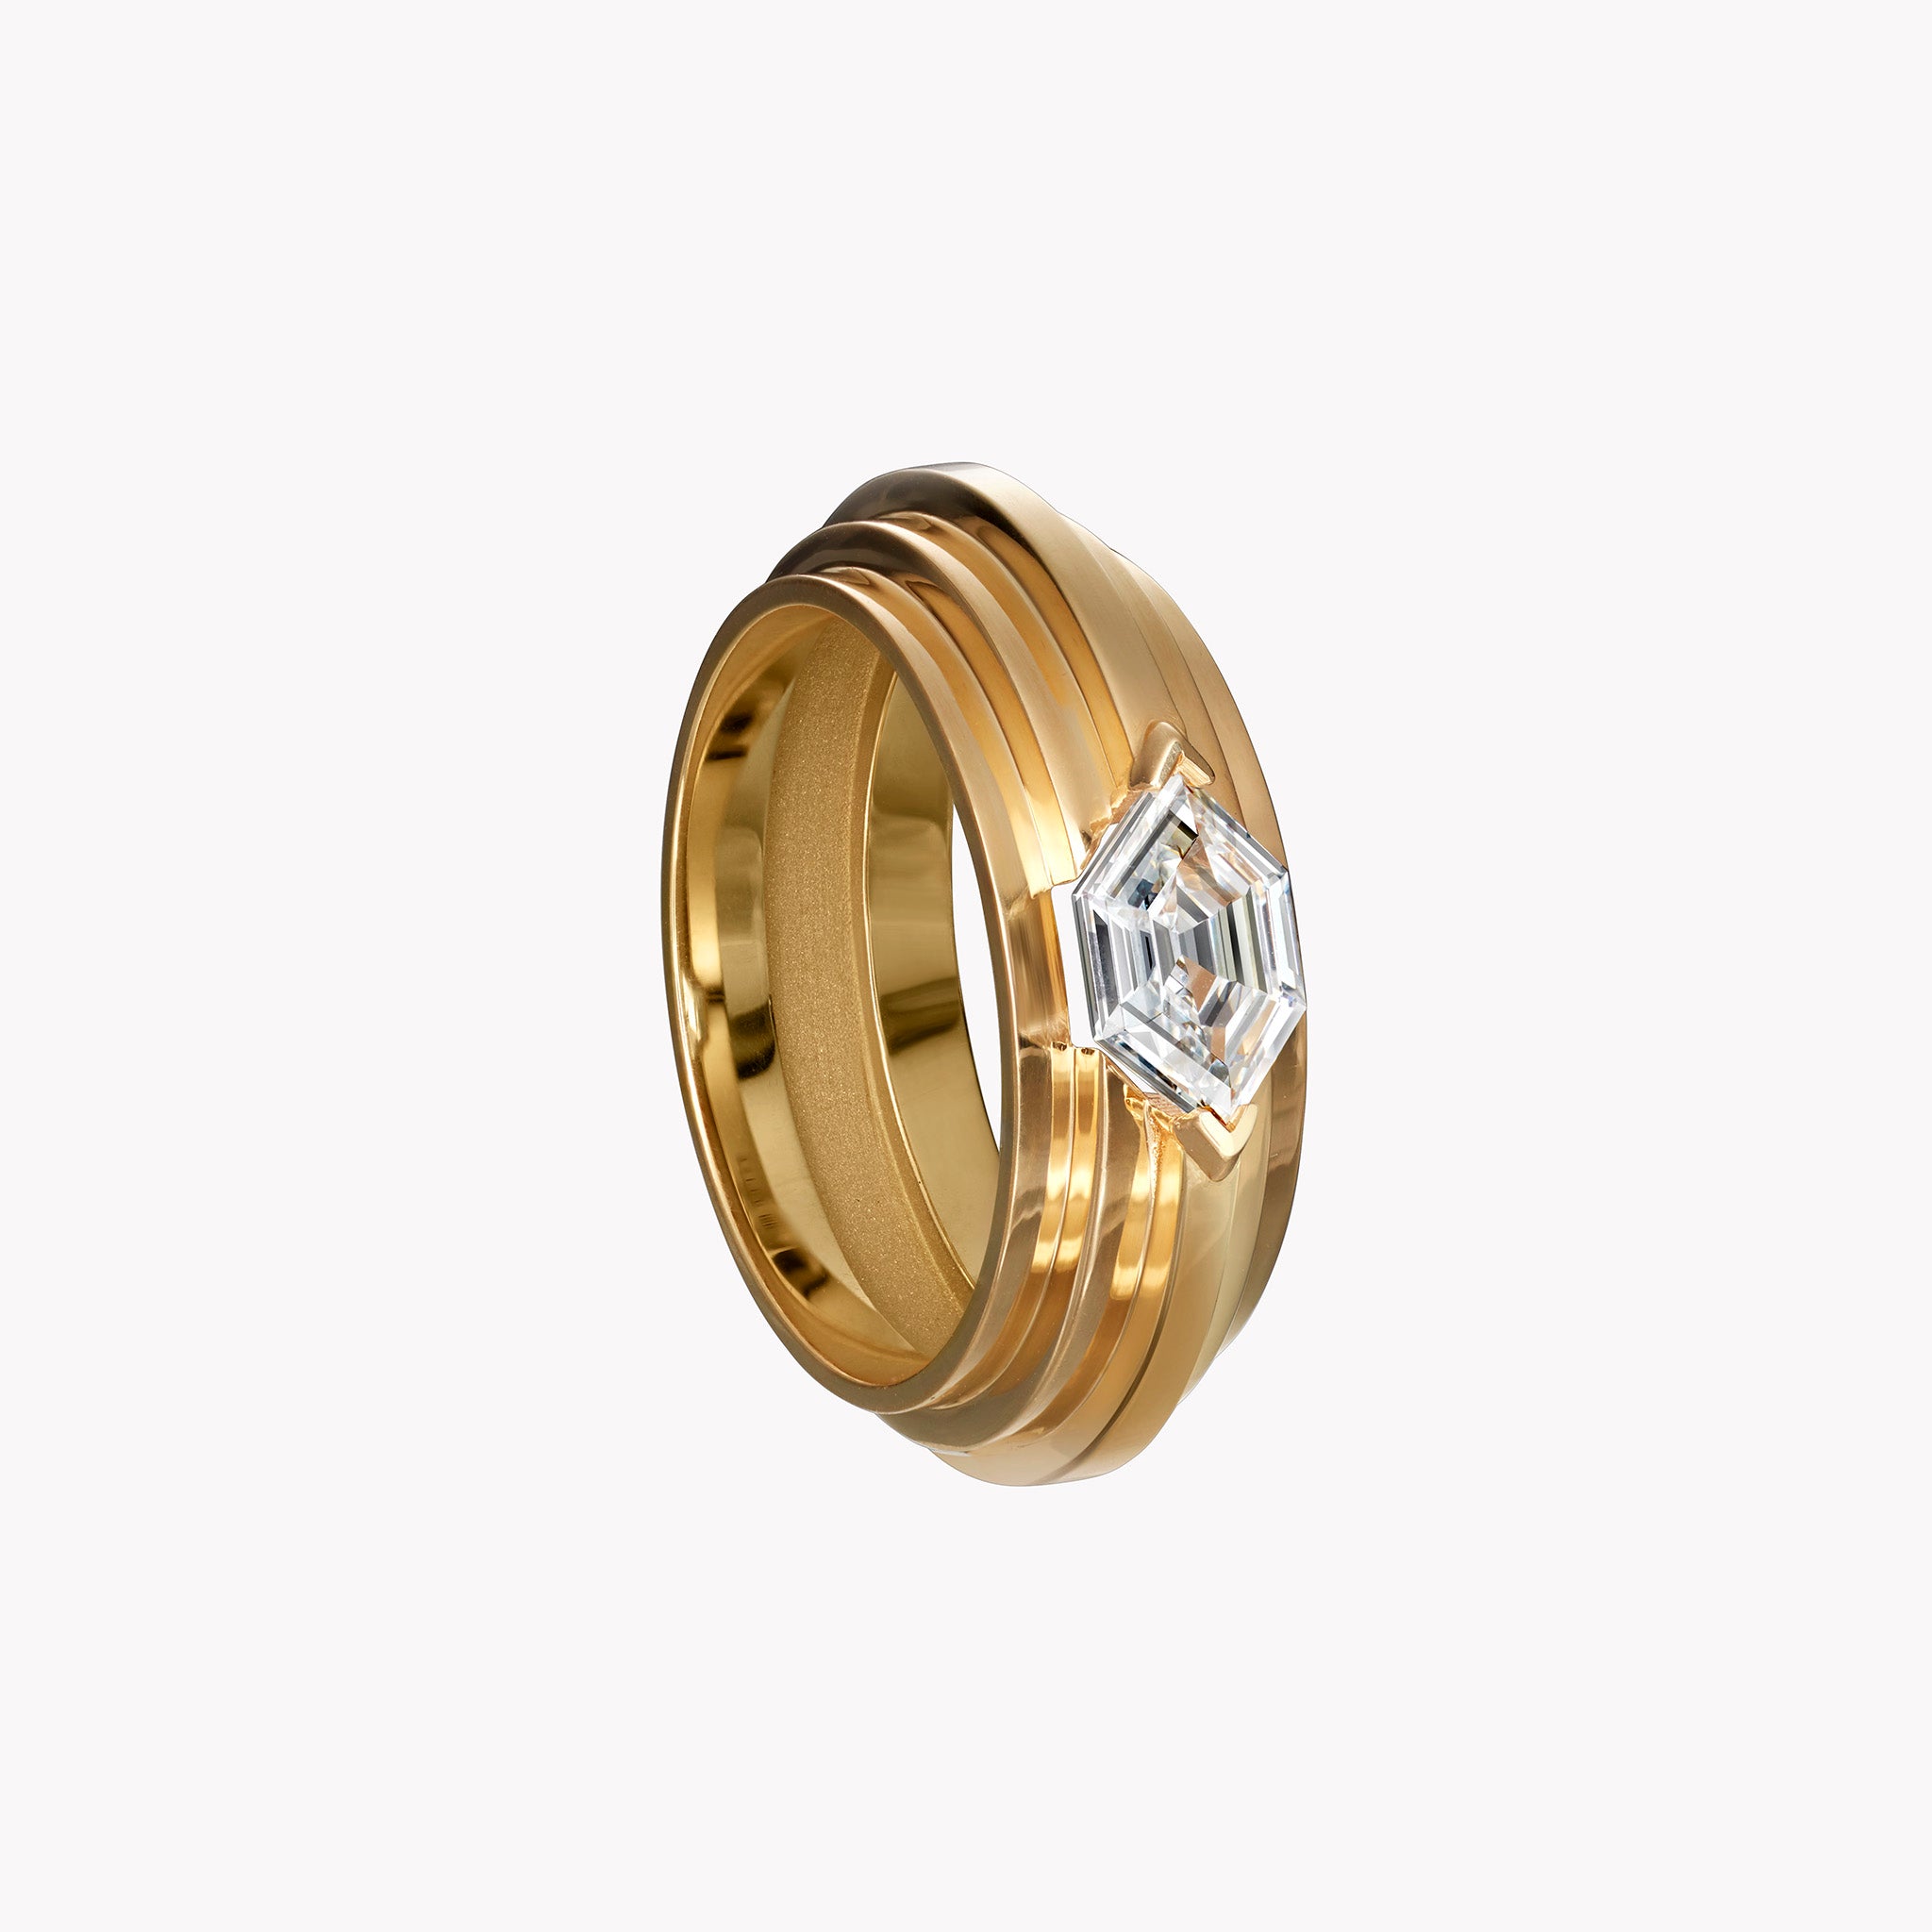 Empress Diamond Ring